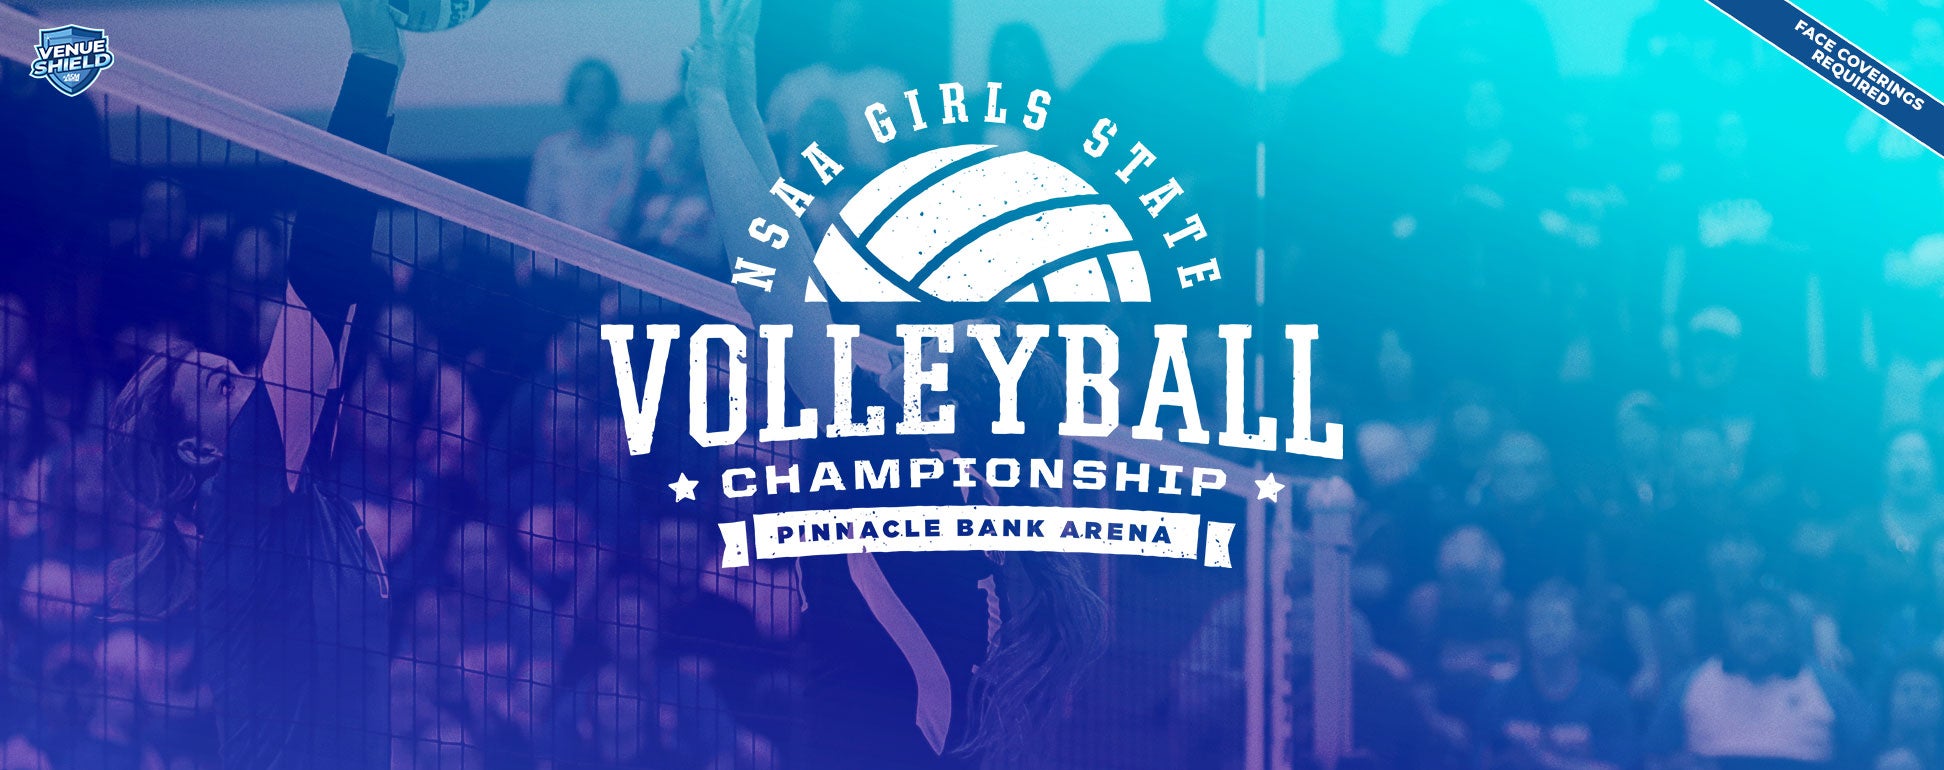 Girls State Volleyball Championship | Pinnacle Bank Arena